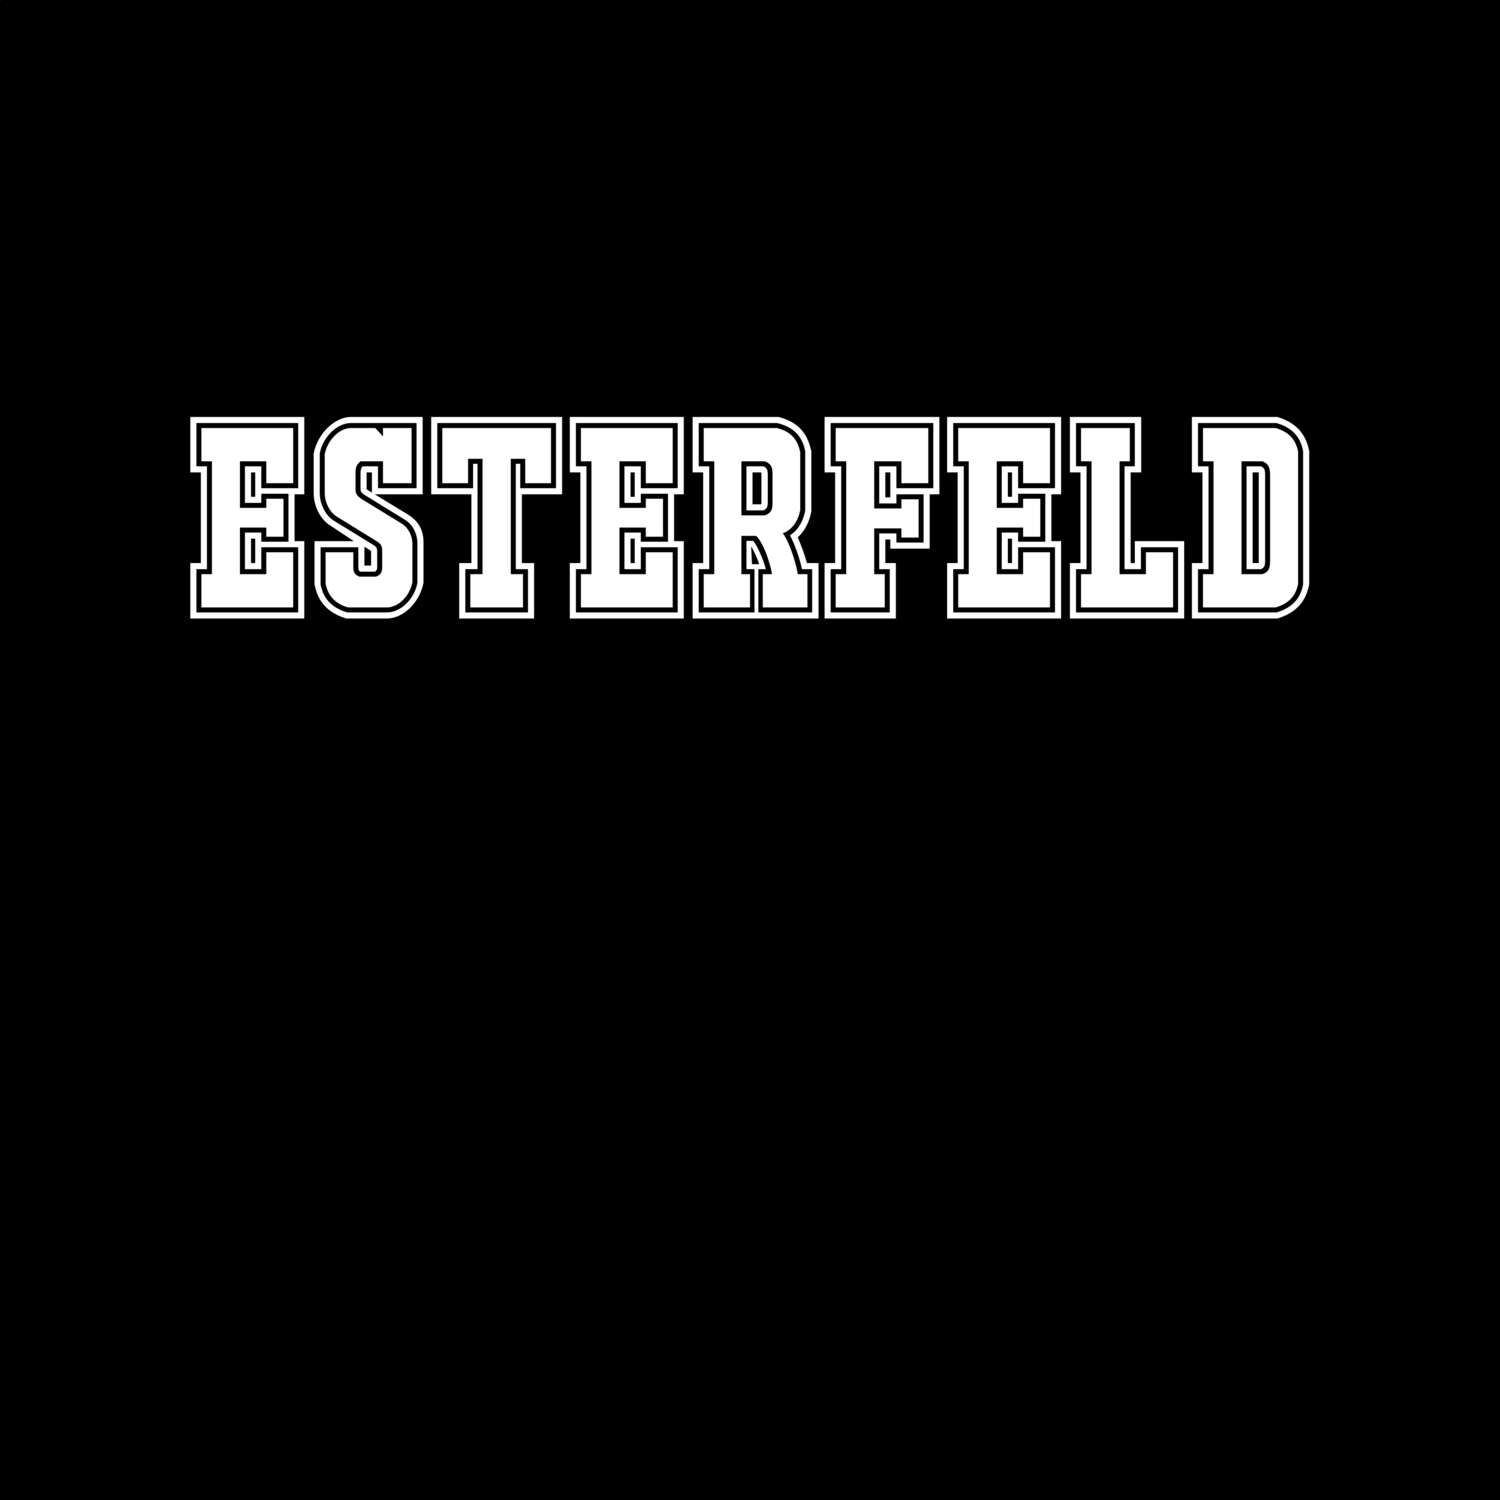 Esterfeld T-Shirt »Classic«